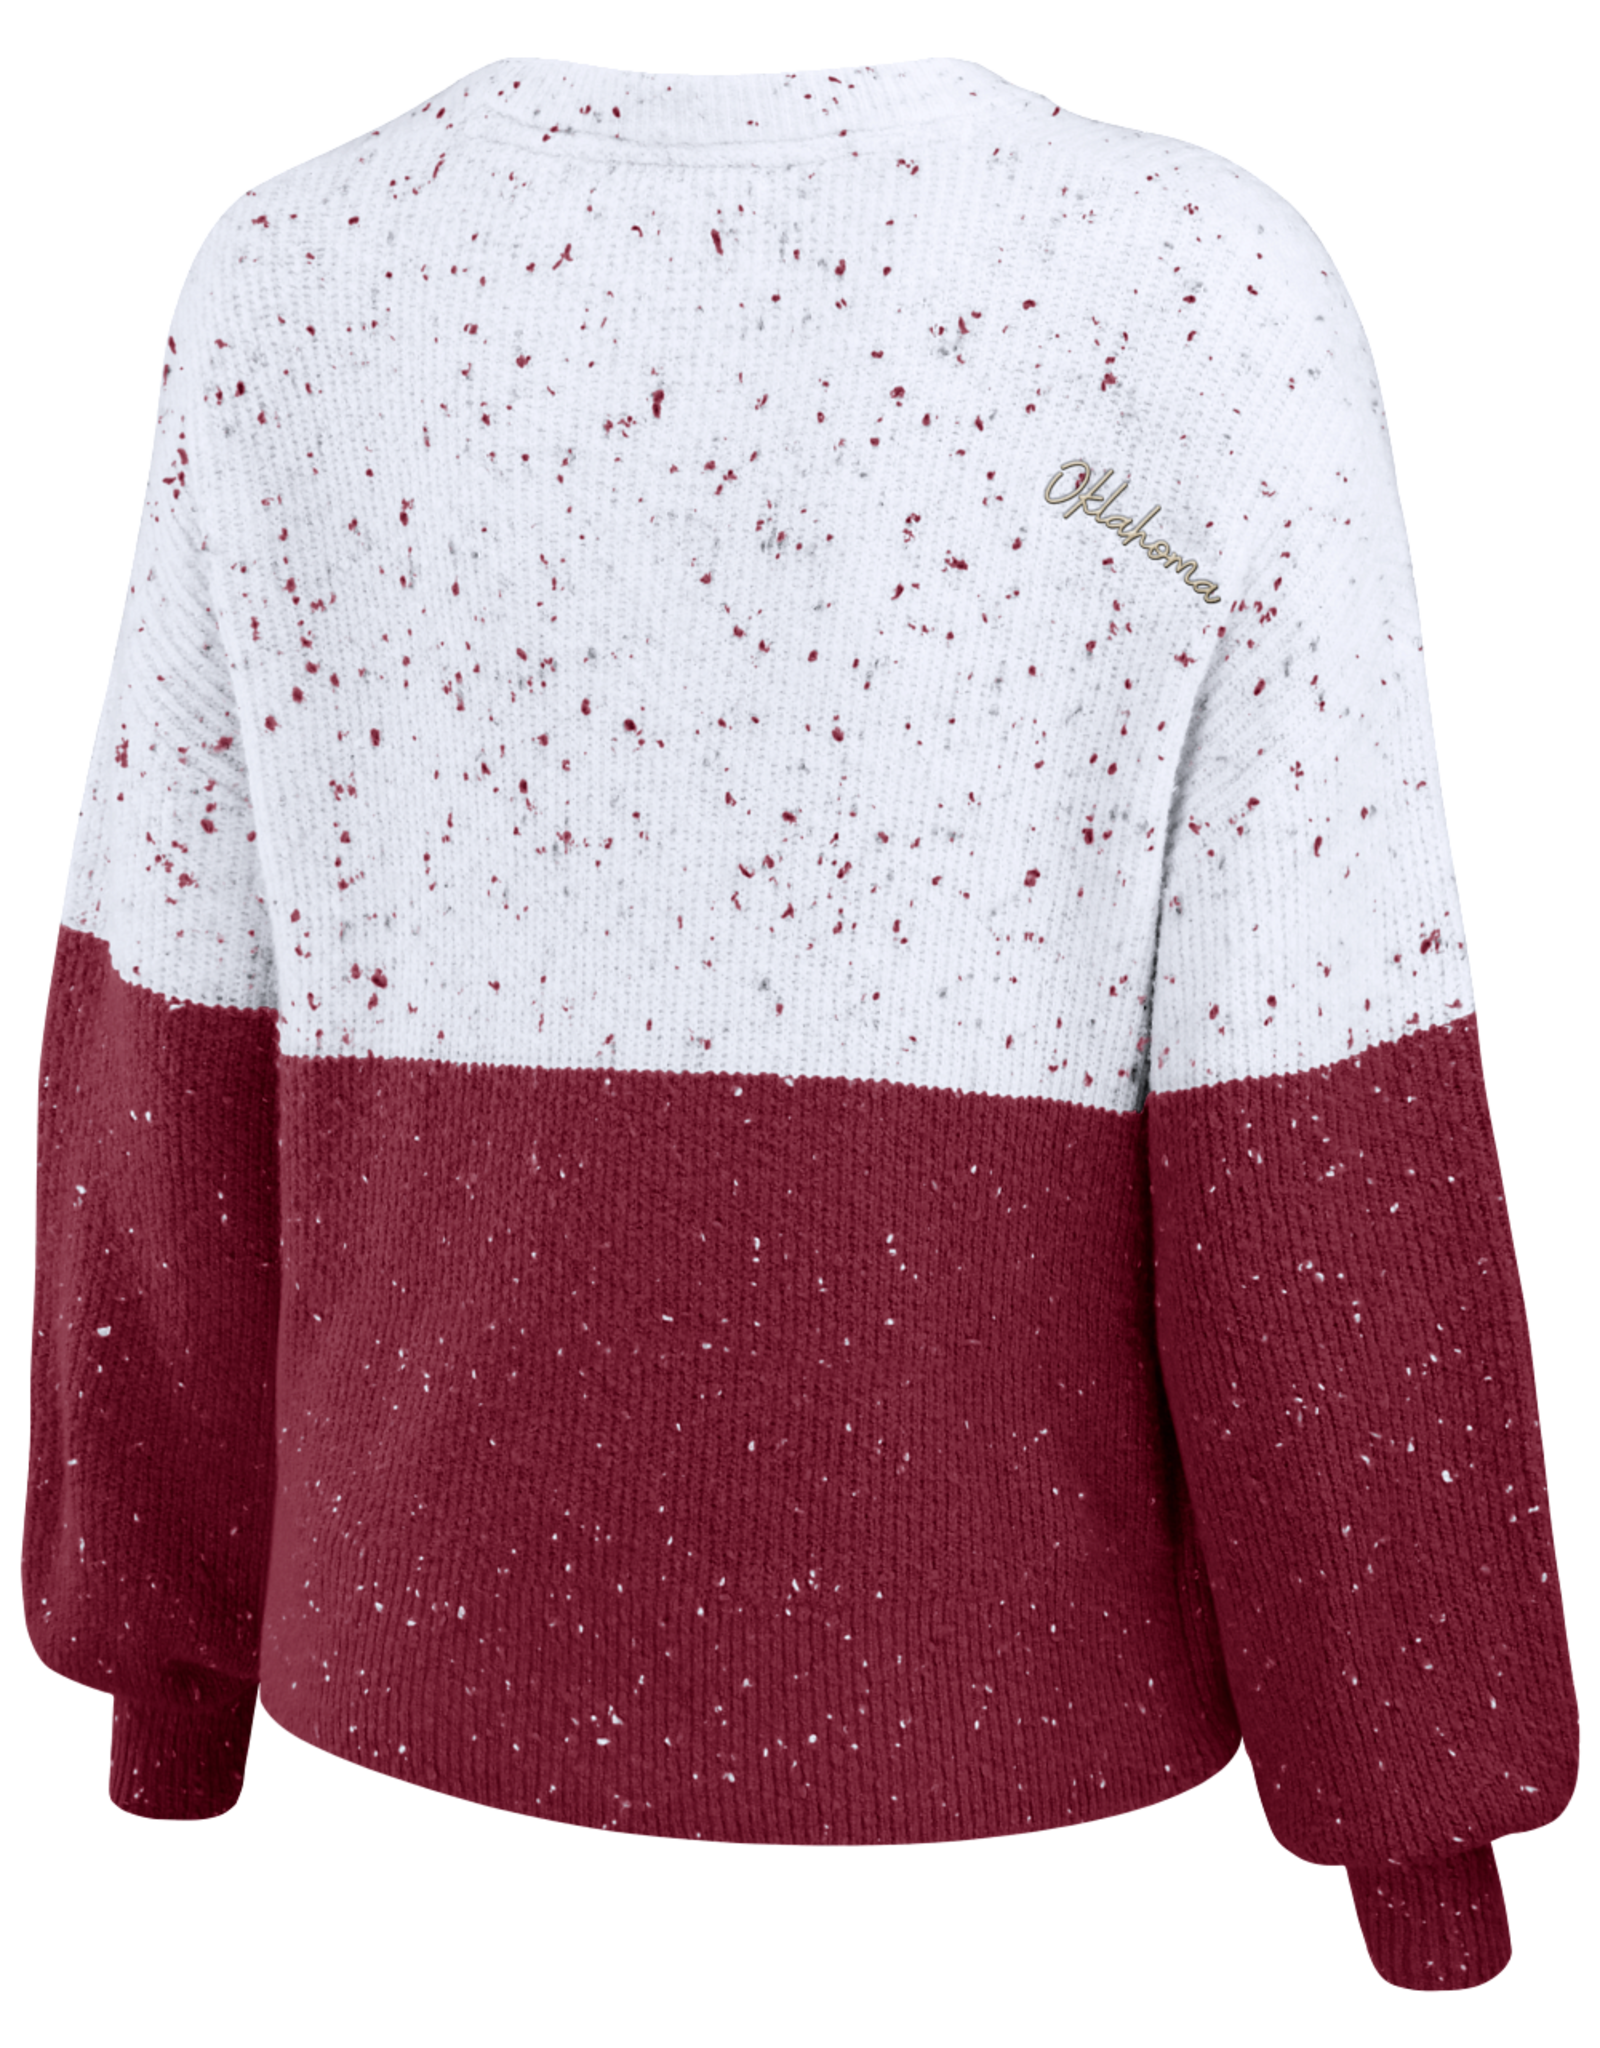 Wear By Erin Andrews Womens OU Sooner Colorblock Script Sweater